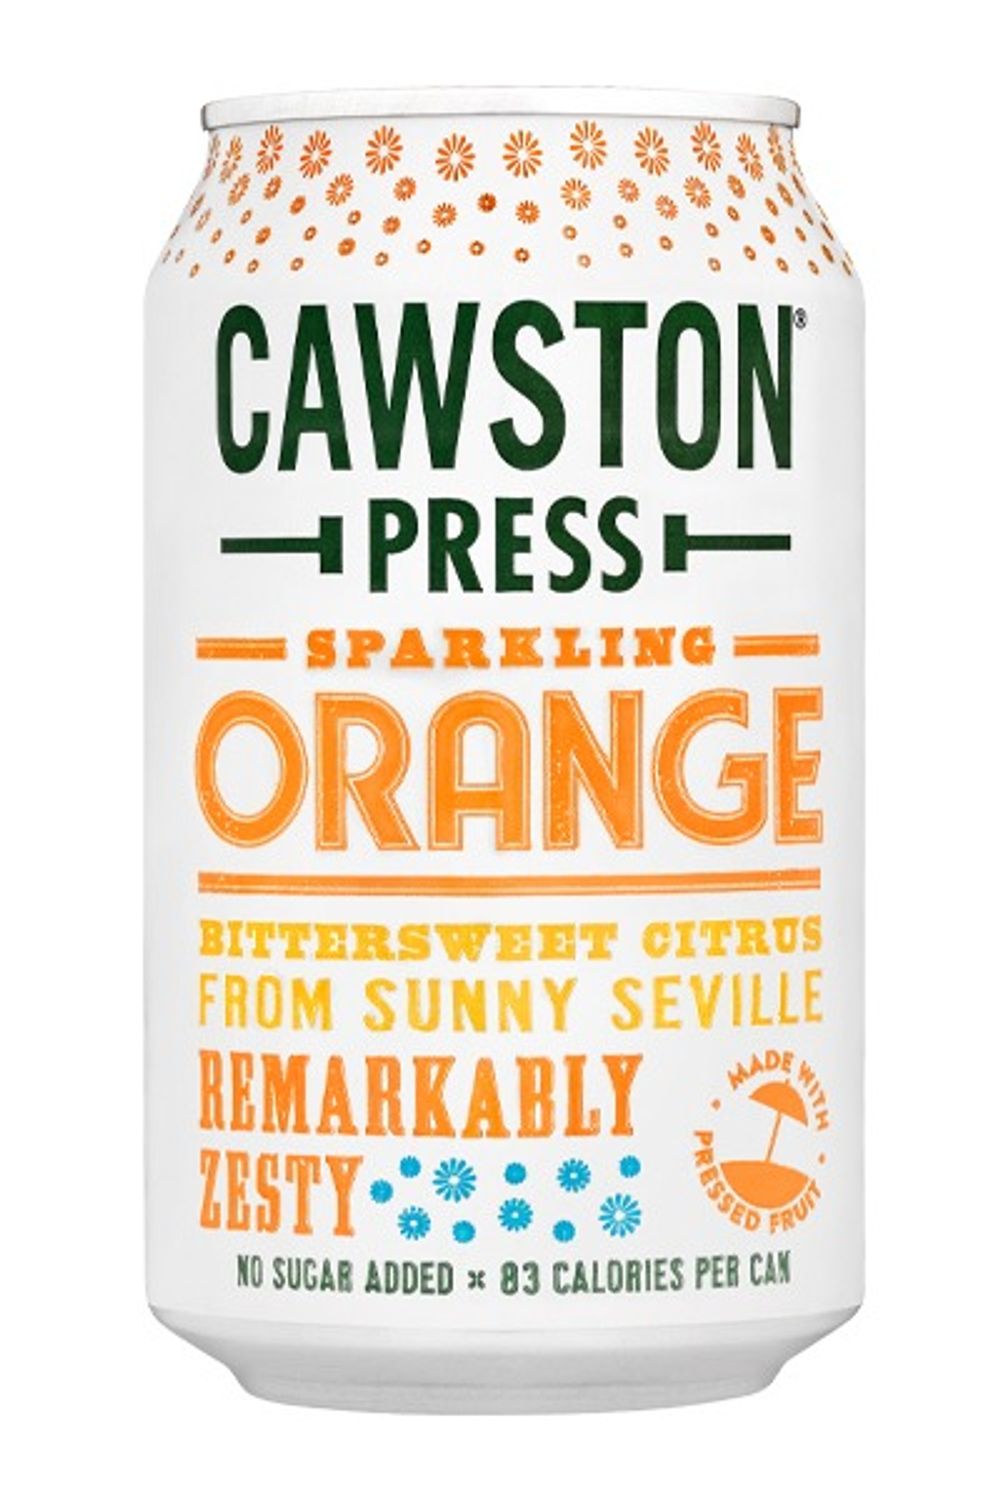 Sparkling Orange Presse